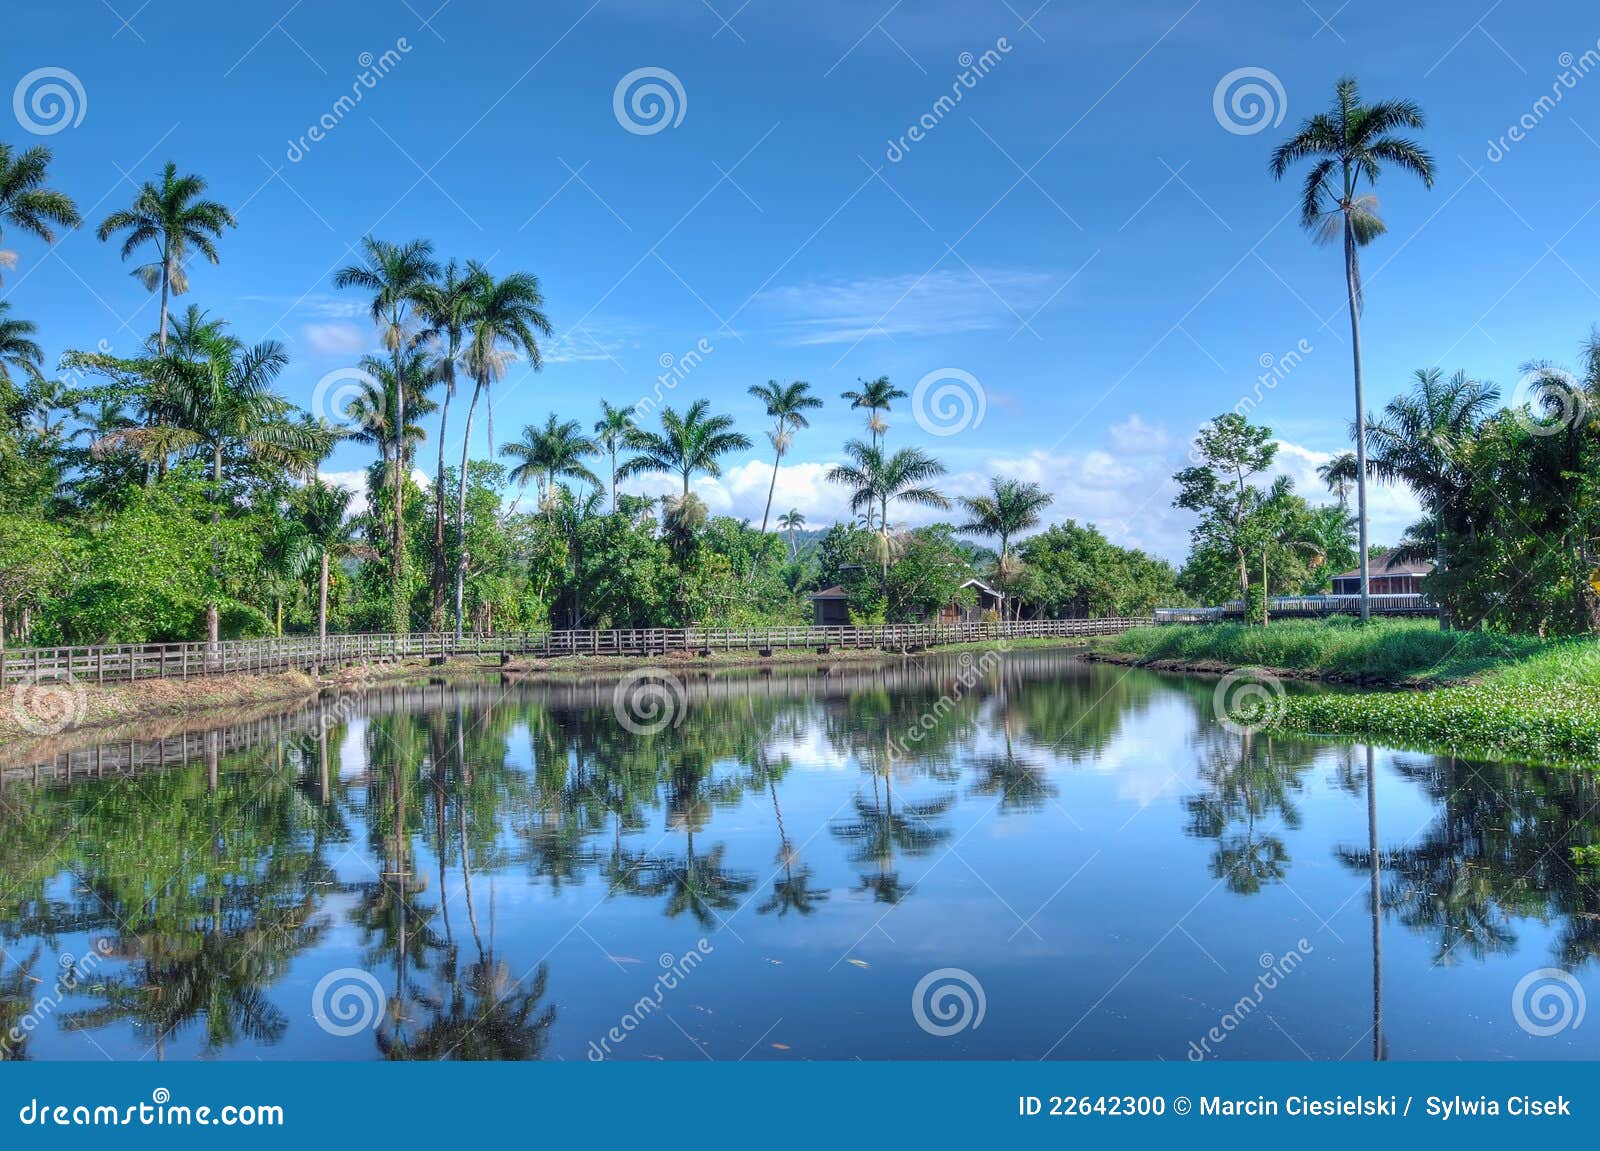 More similar stock images of ` Beautiful Jamaican landscape `